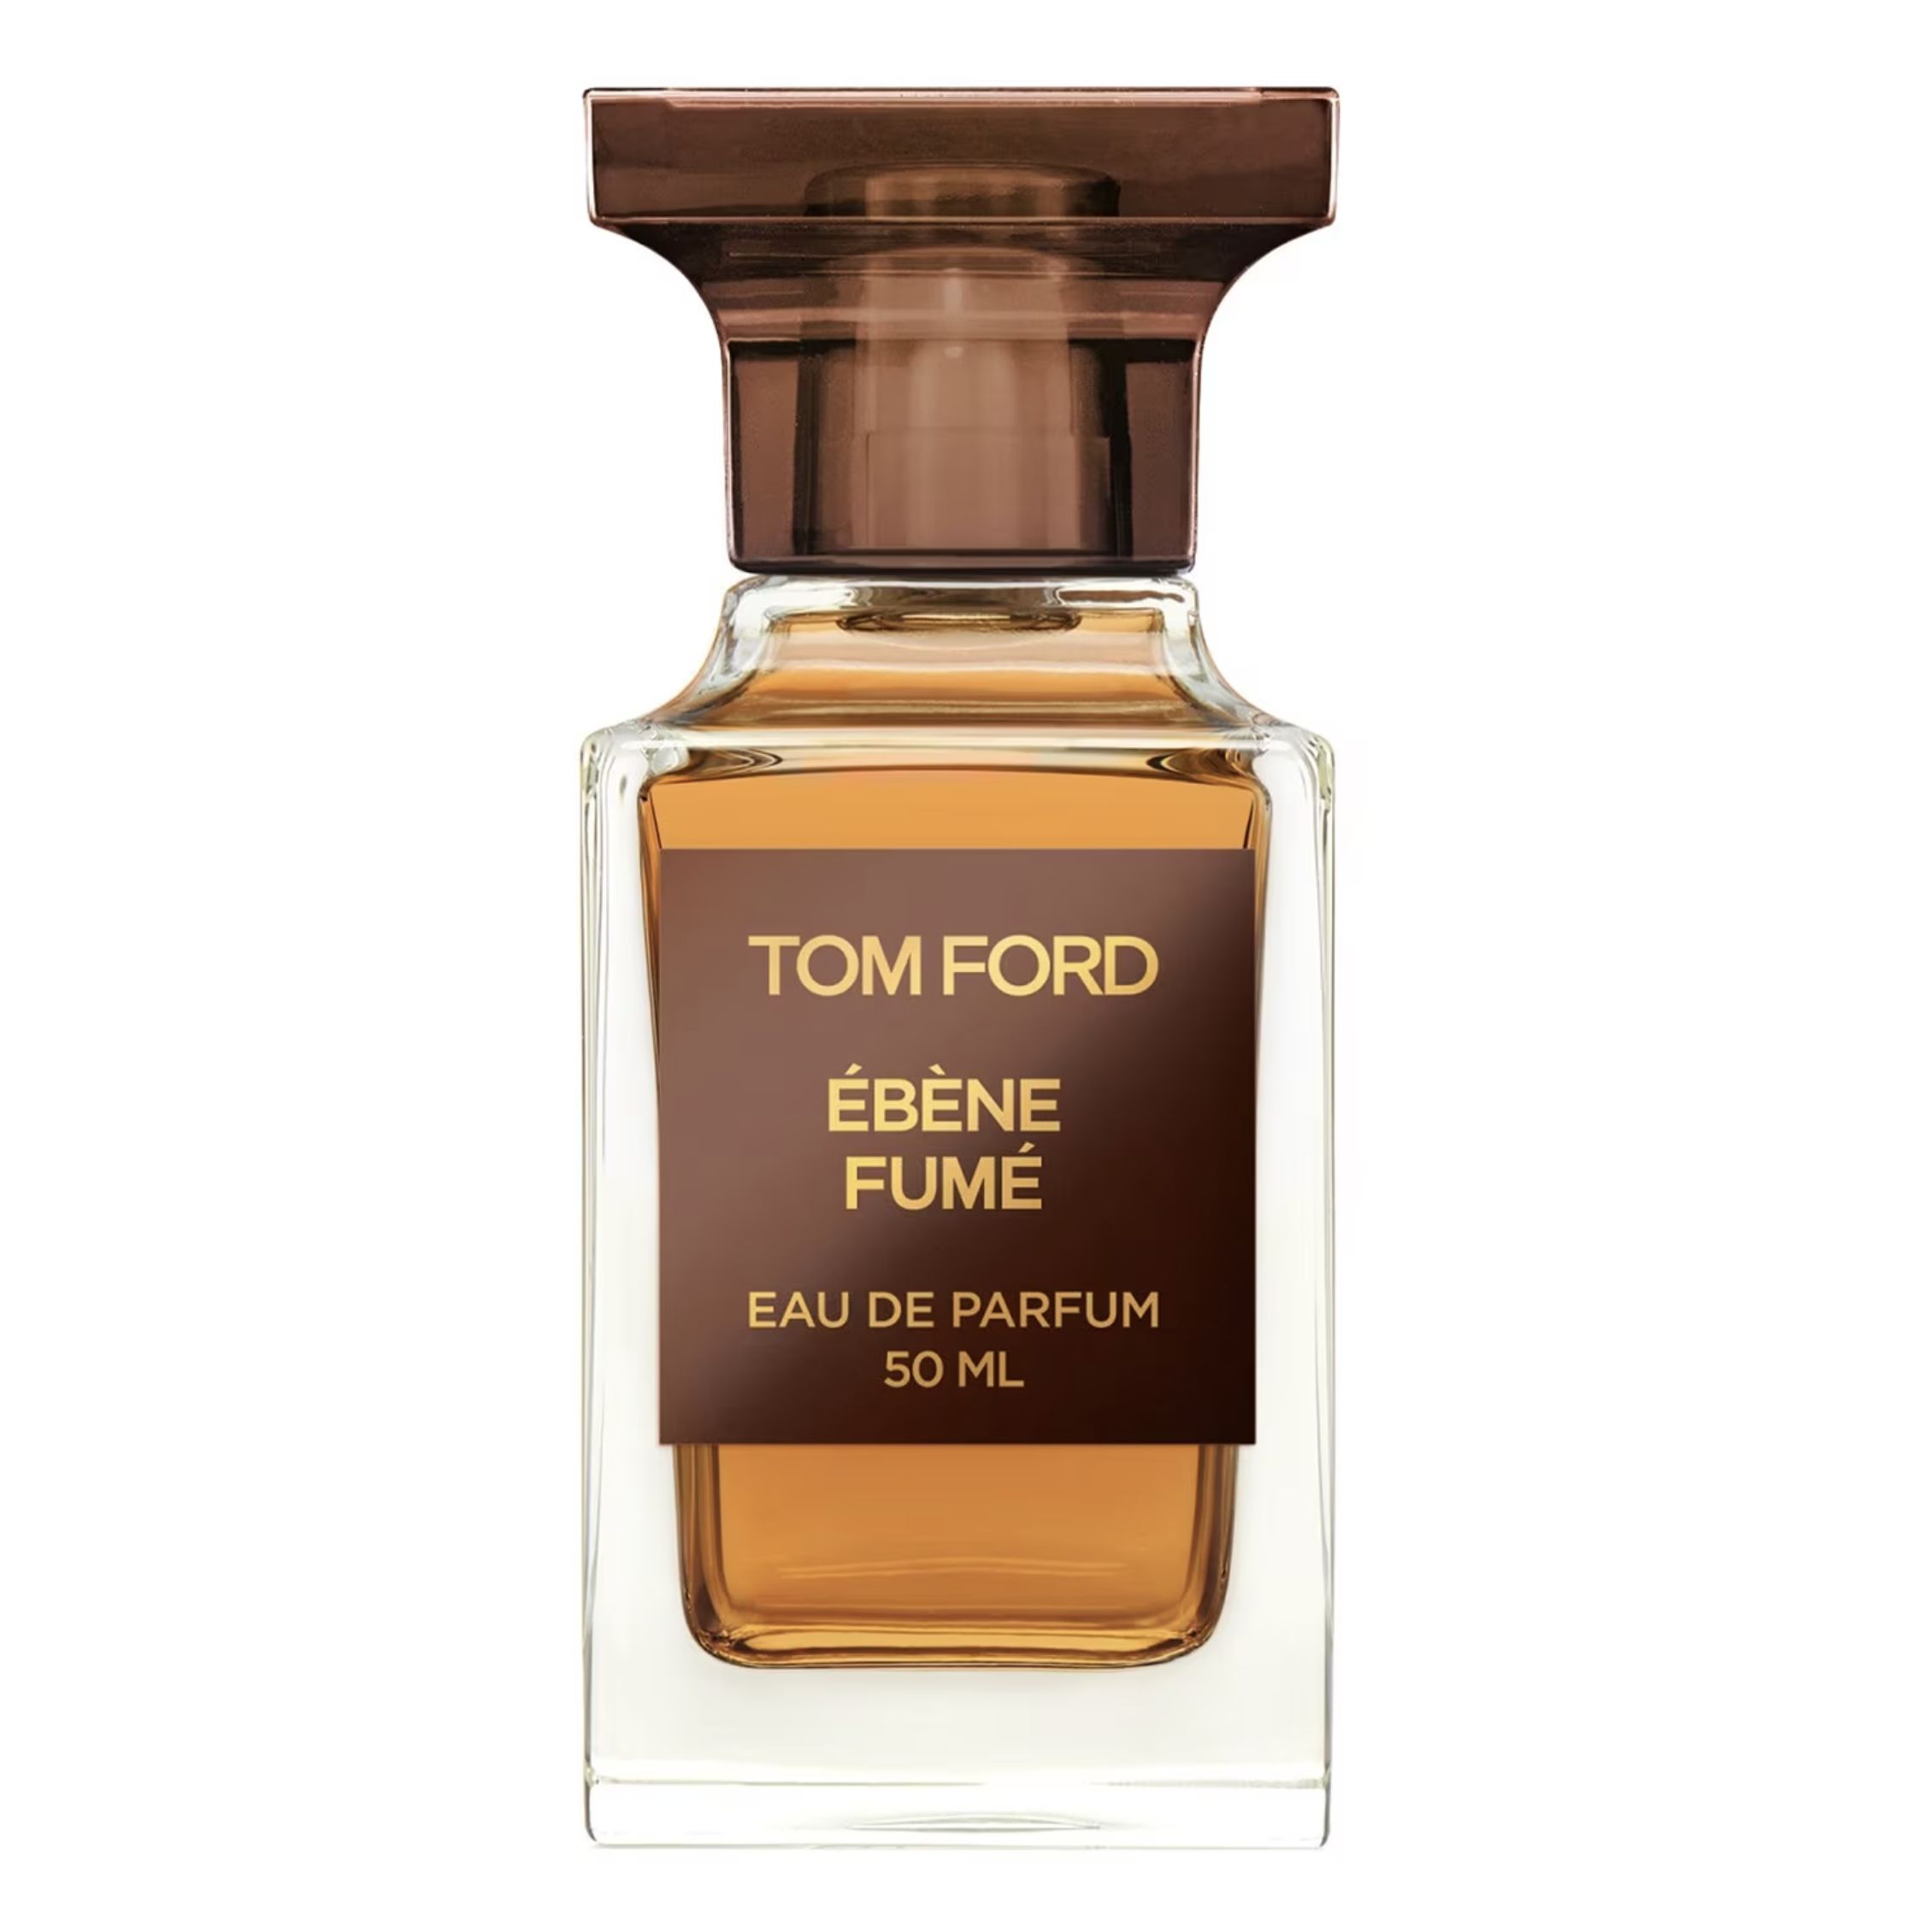 Tom Ford ebene fume. Ébène fumé Tom Ford 100 ml. Tom Ford ebene fume 100ml. Tom Ford Santal blush, 50 мл. Том форд золотые духи